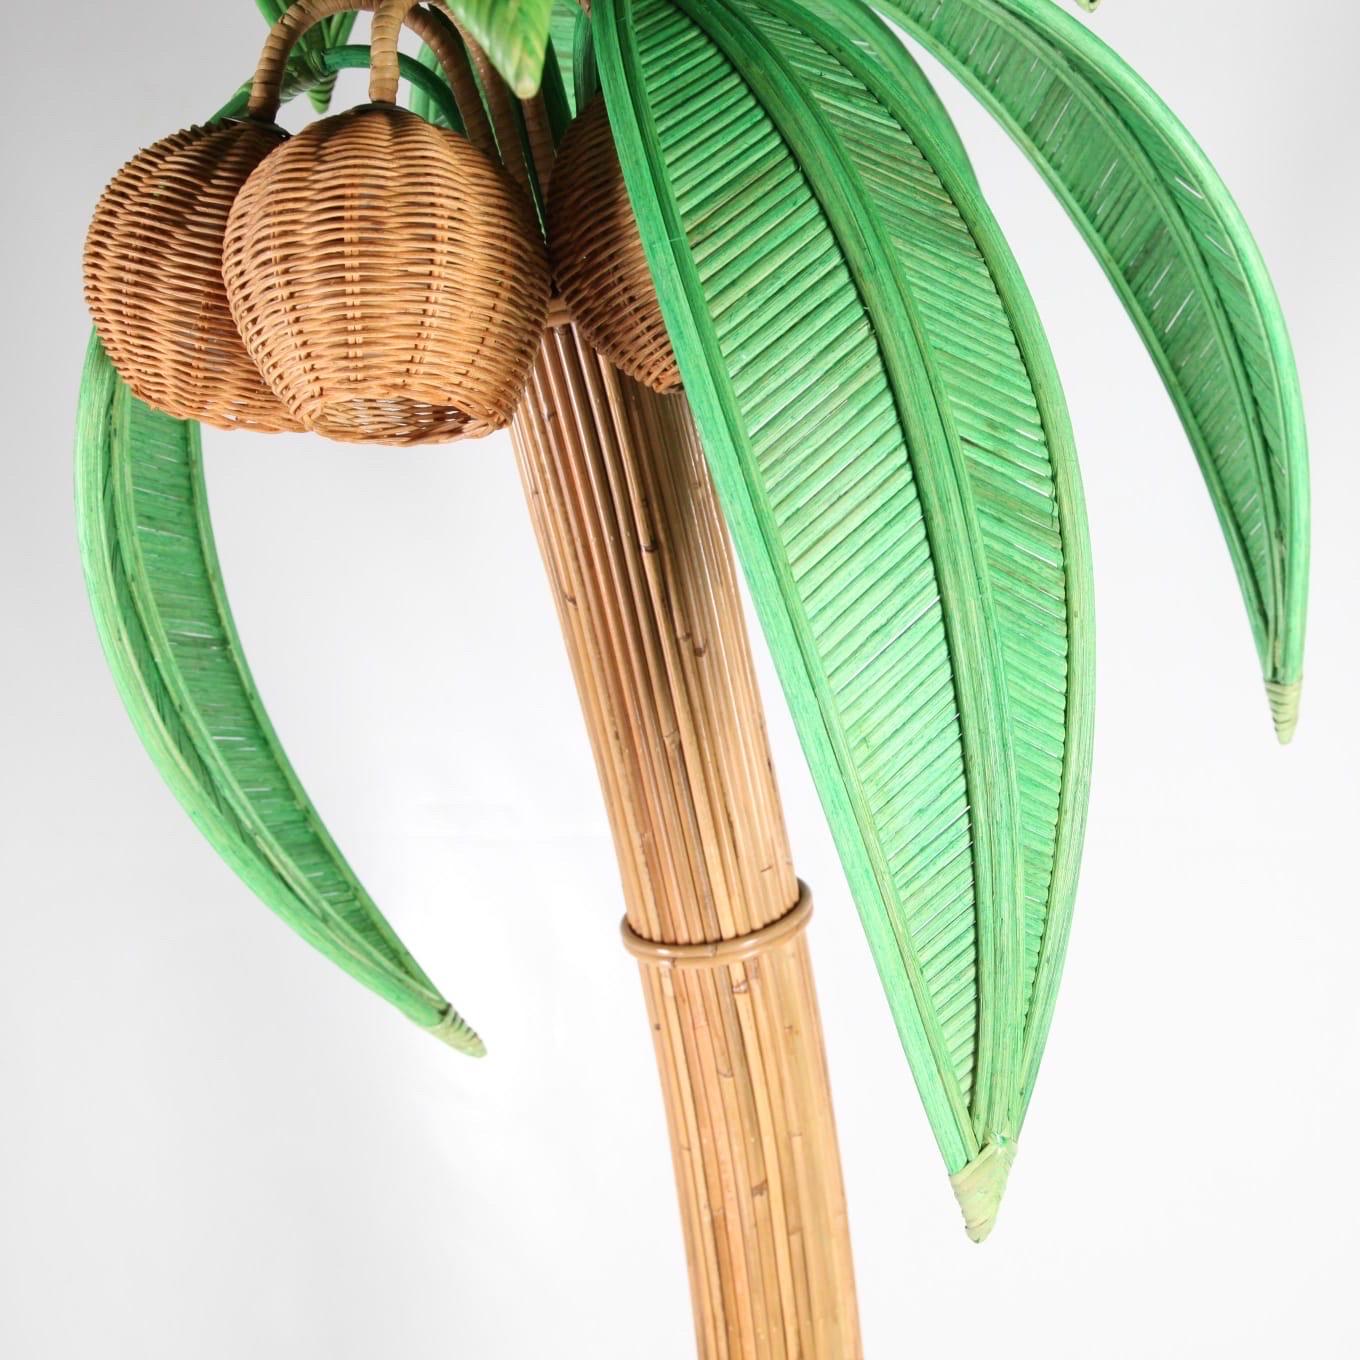 Rattan « coconut tree/palm tree » floor lamp For Sale 3